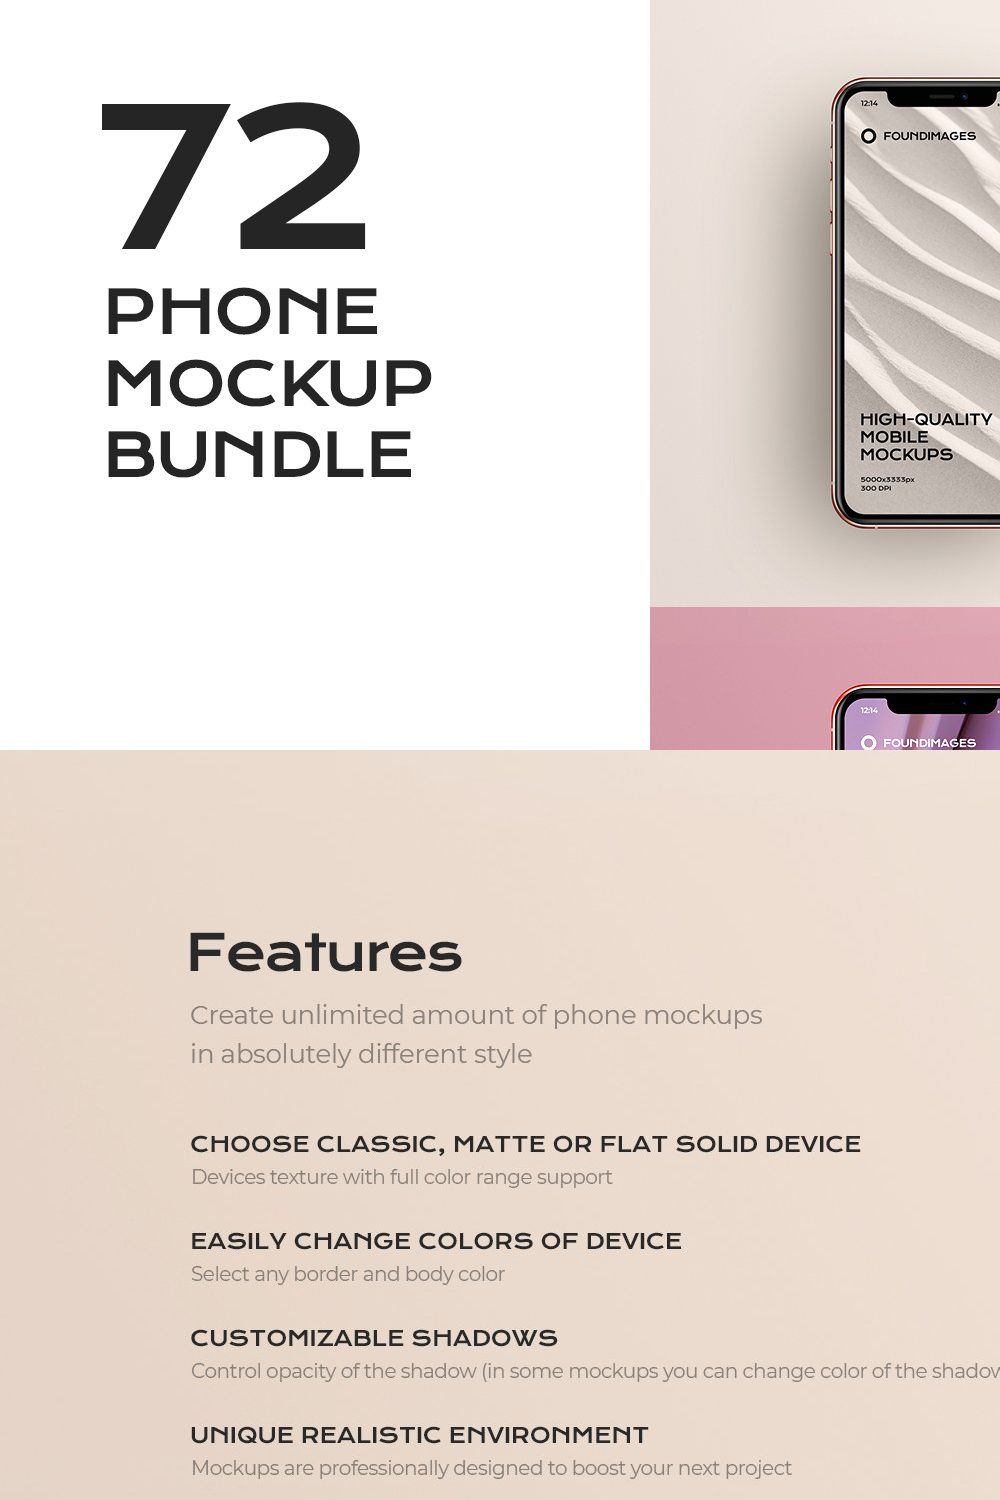 72 iphone device mockup bundle pinterest preview image.